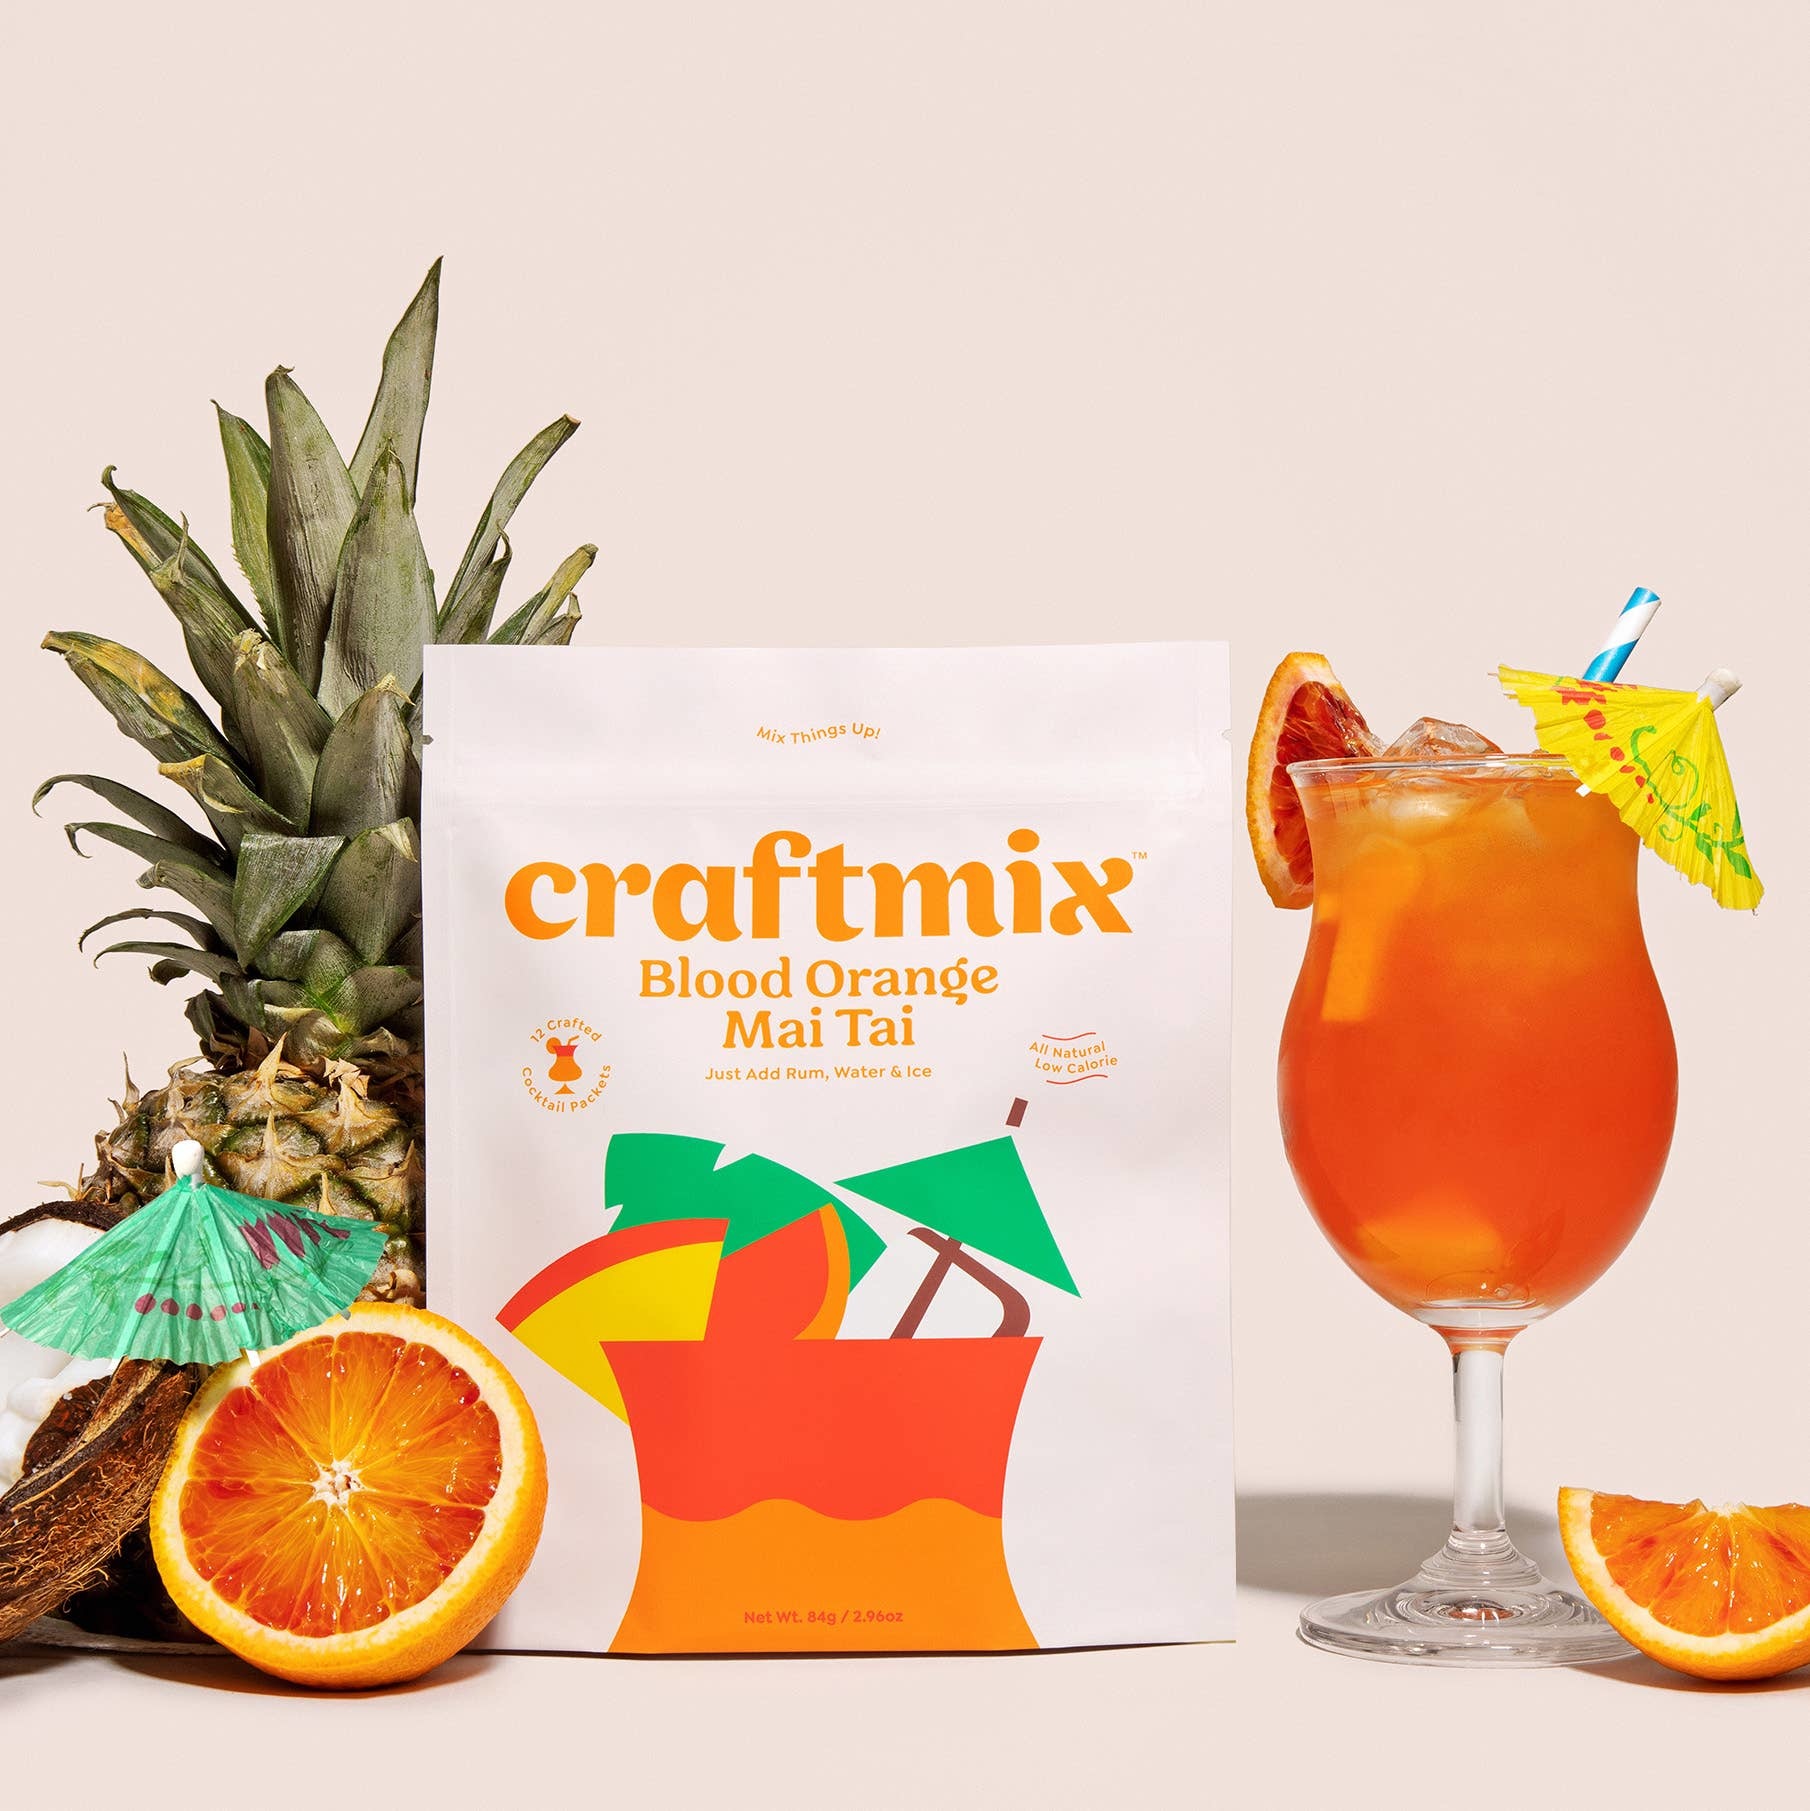 Craftmix Cocktail Mix Packets, Blood Orange Mai Tai, 12 Packets